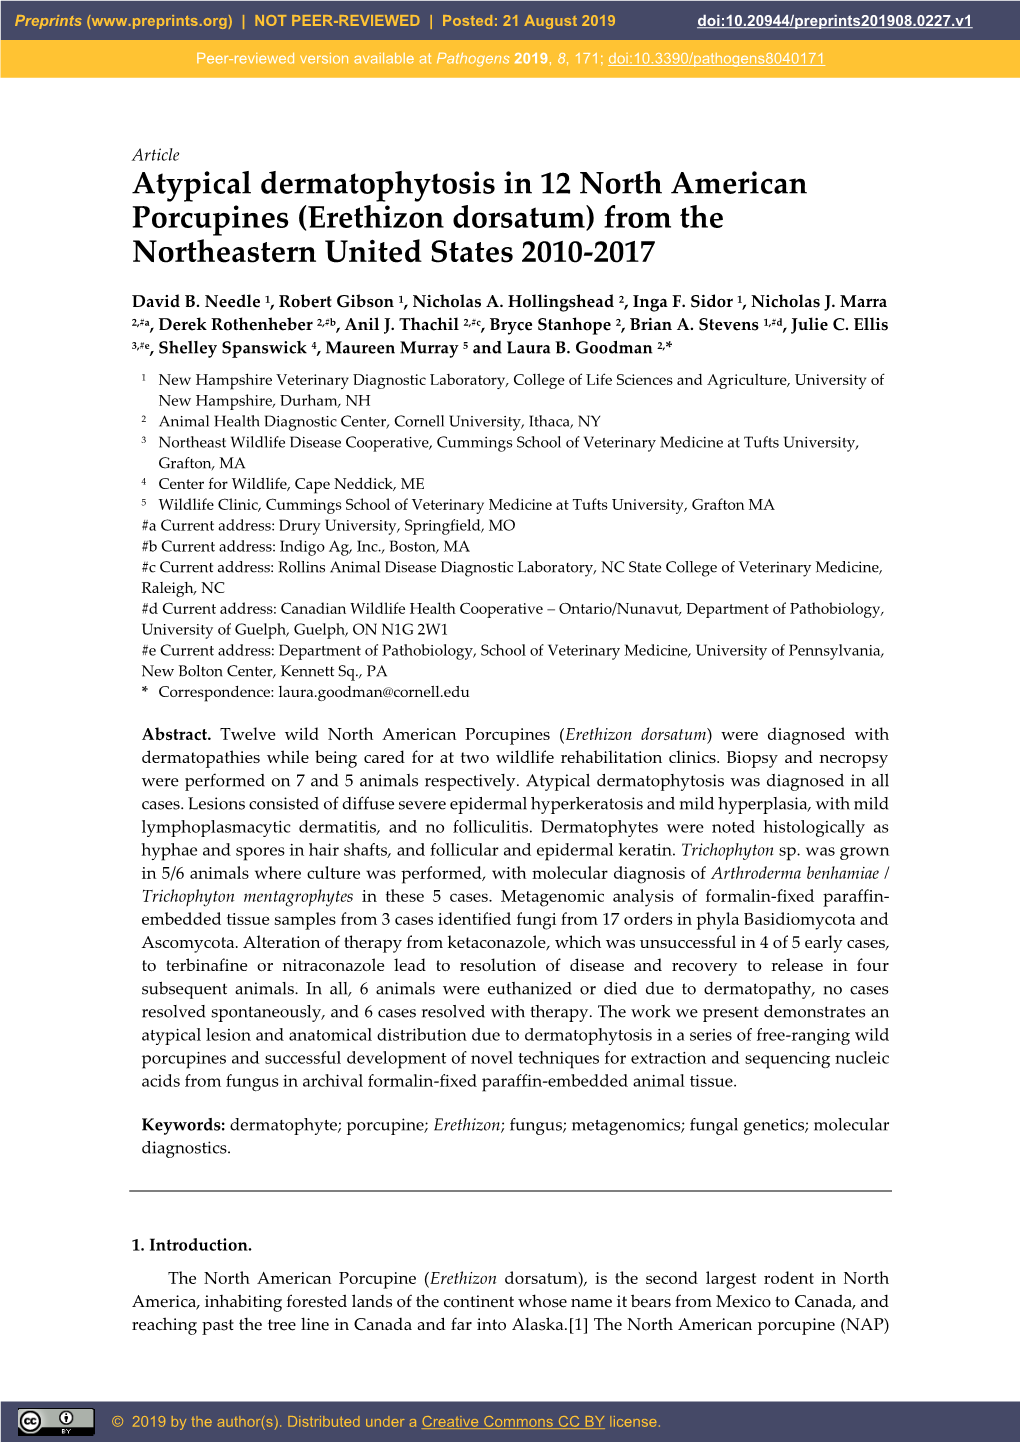 Erethizon Dorsatum) from the Northeastern United States 2010-2017